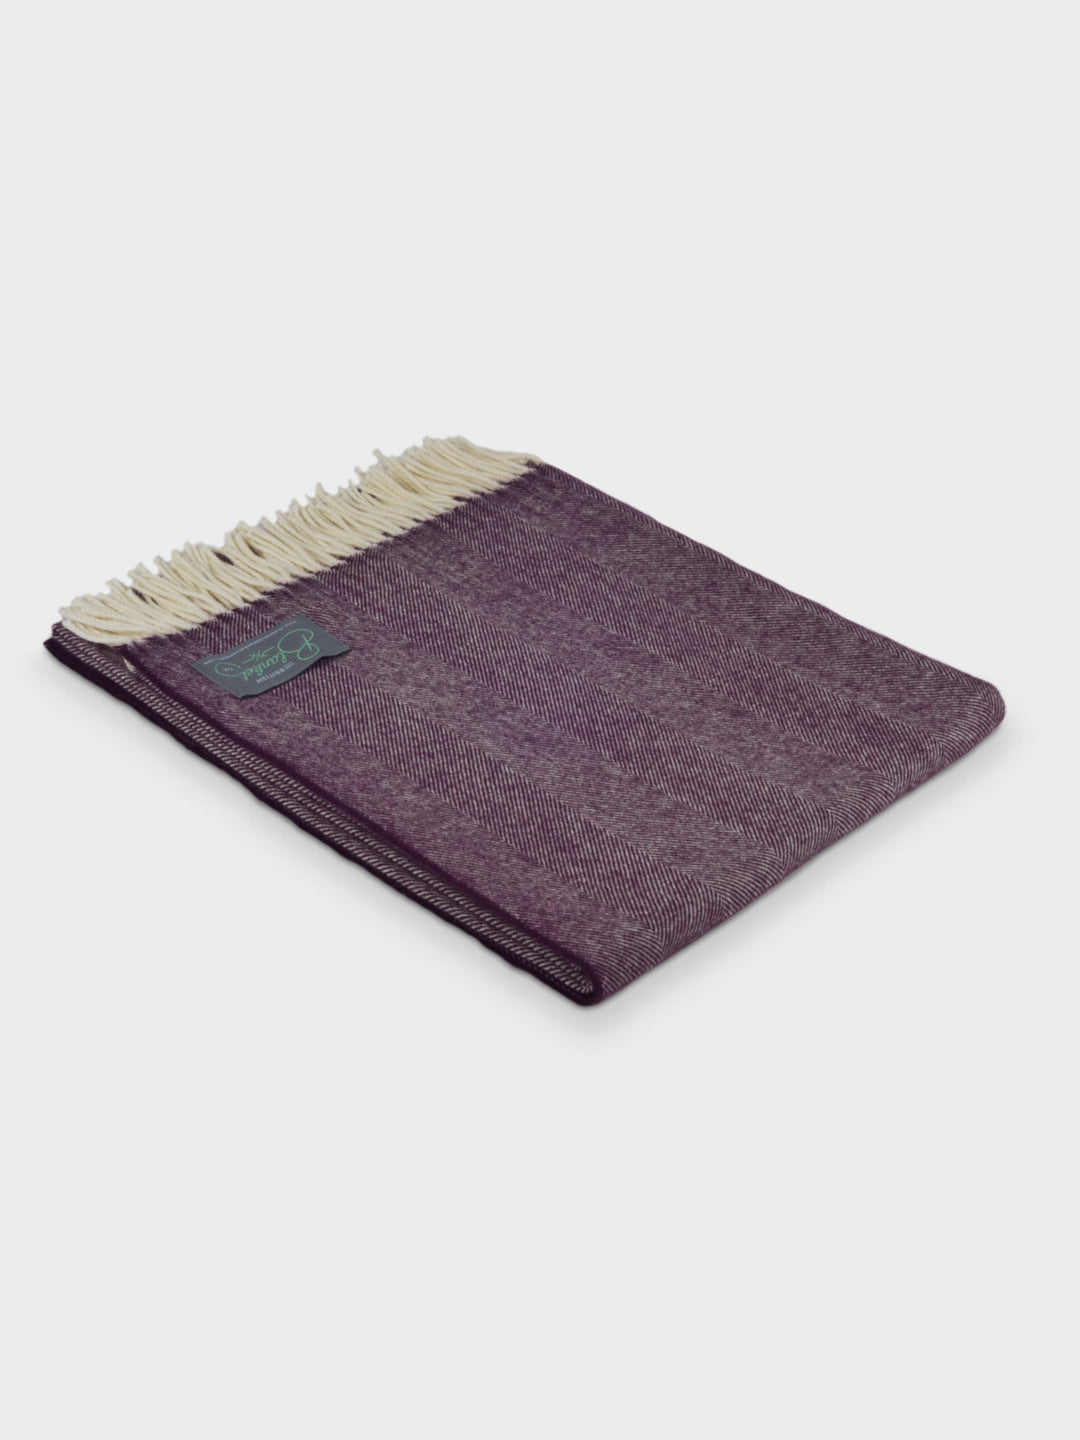 Folded purple herringbone wool throw by The British Blanket Company.